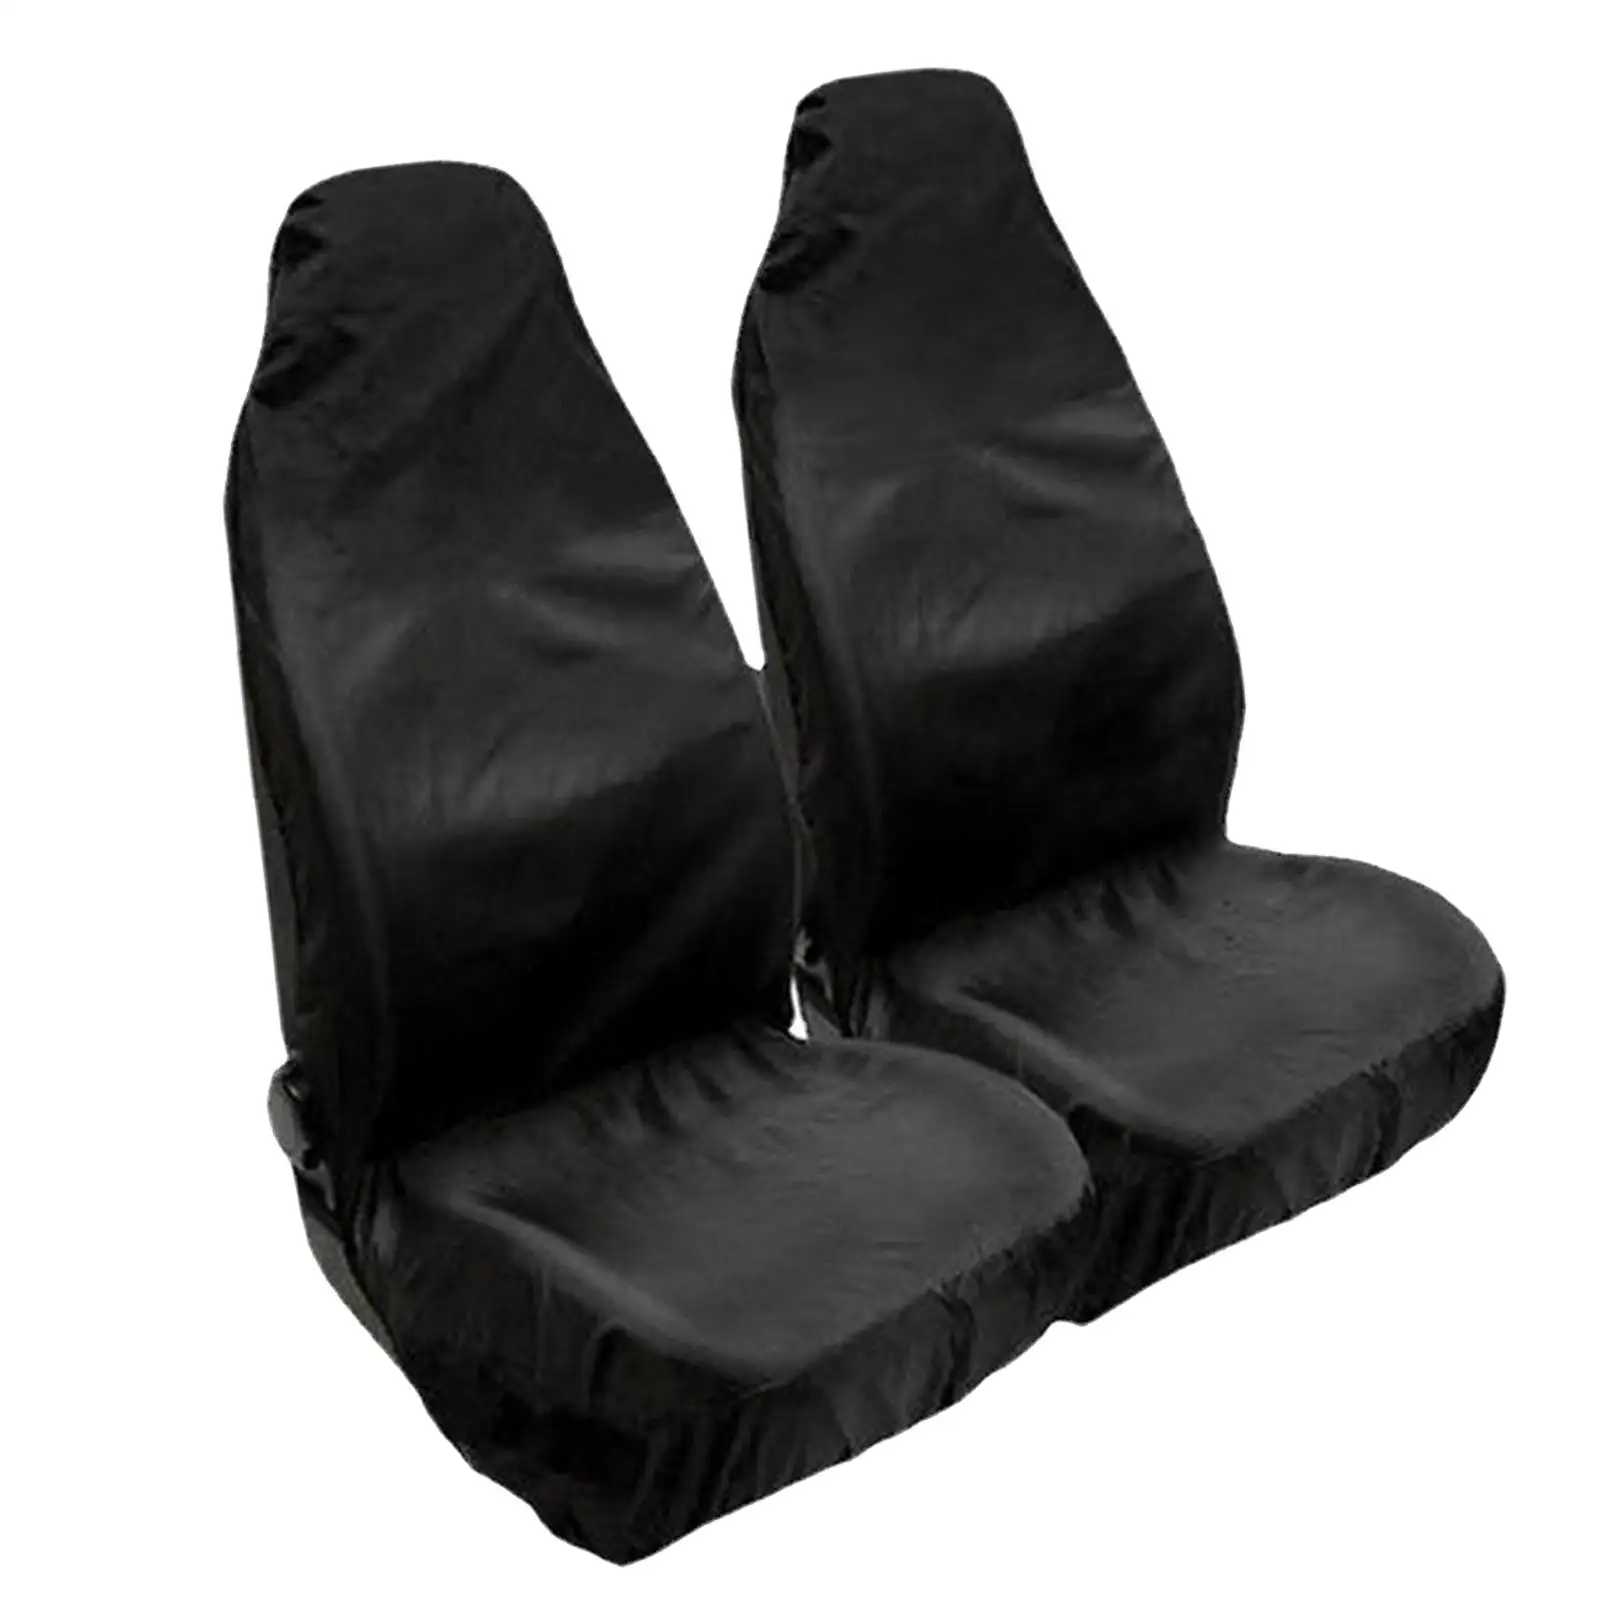 2Pcs Seat Cover Set Foldable Seat Cushion Cover for Trucks Cars SUV